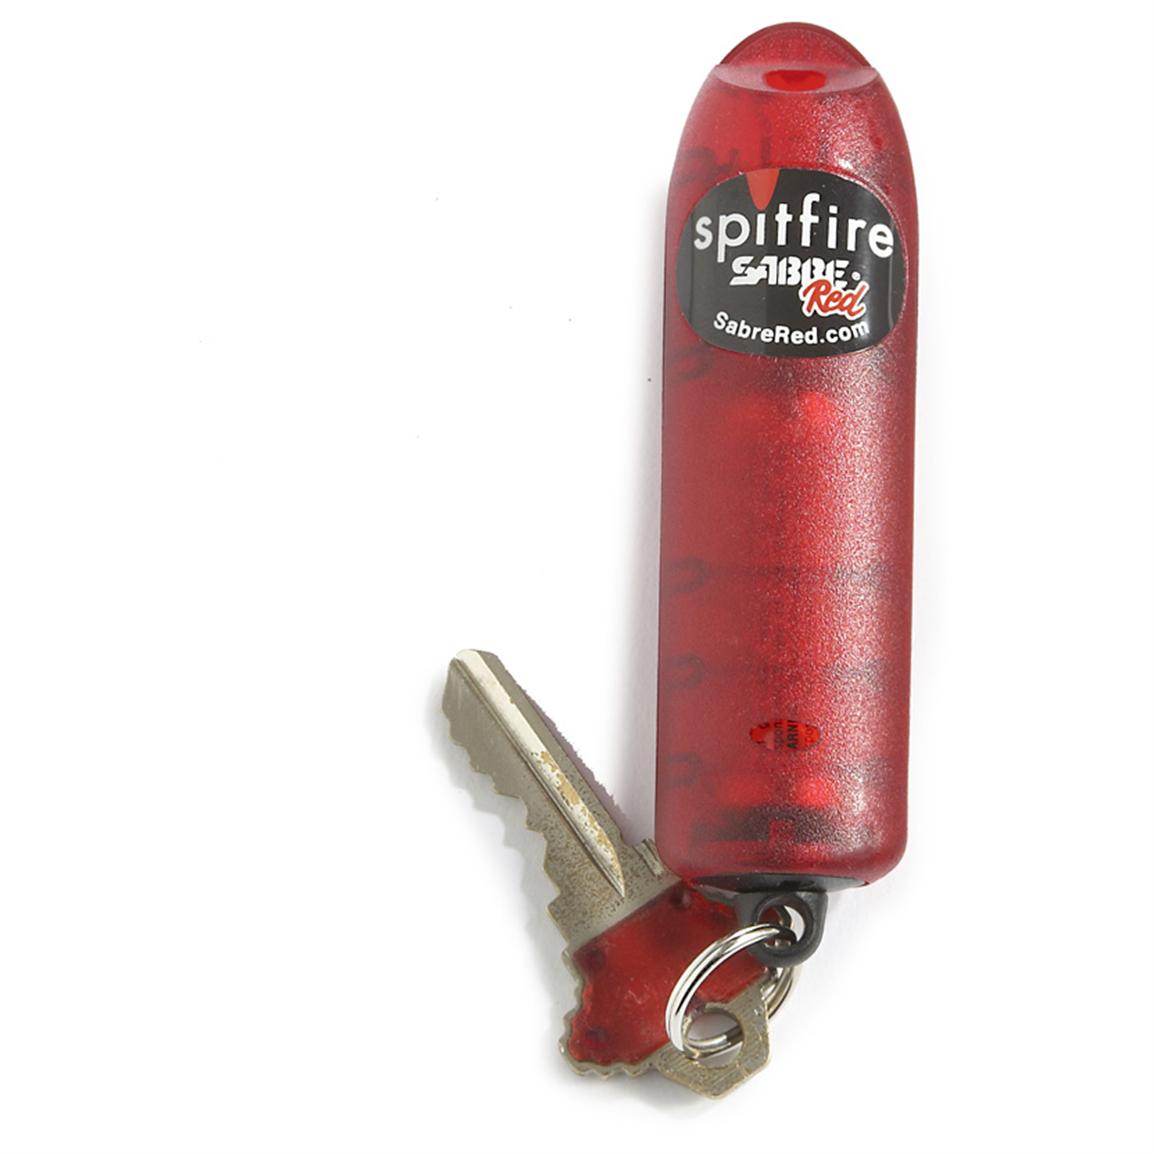 Sabre Red Spitfire® Pepper Spray, Red - 609755, Pepper Sprays at